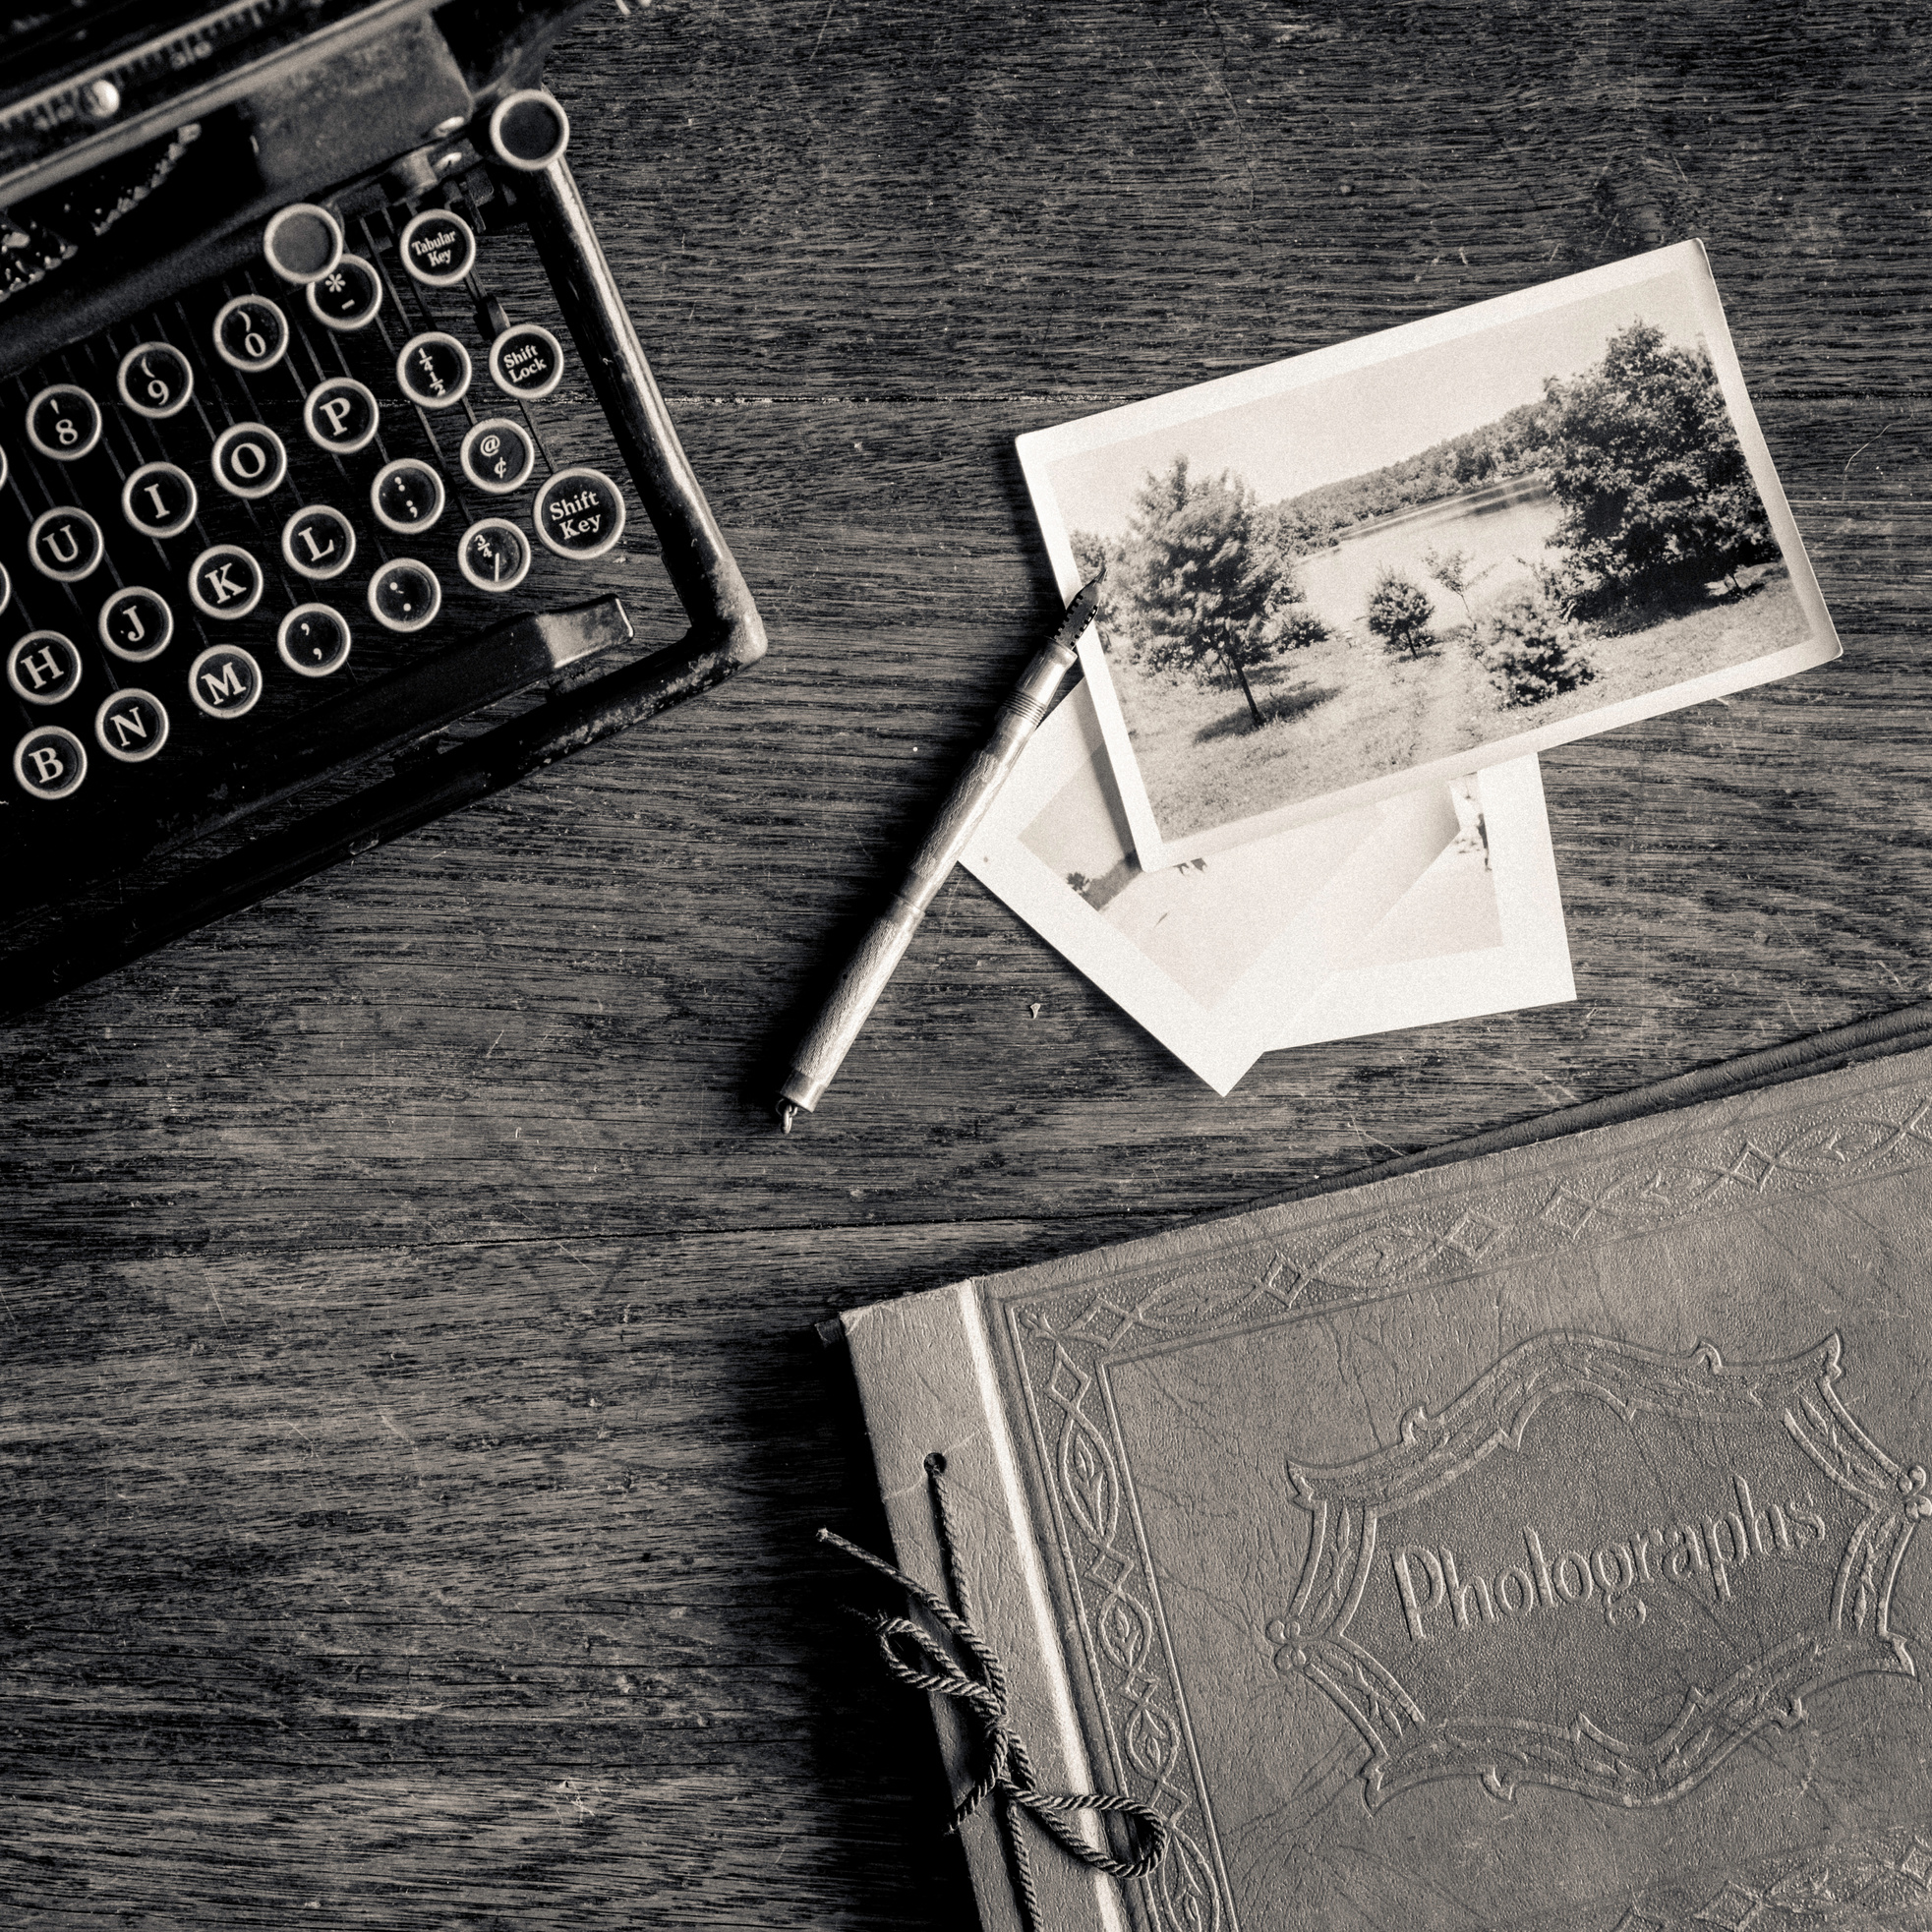 Antique Typewriter, Photos and Photo Album Black & White